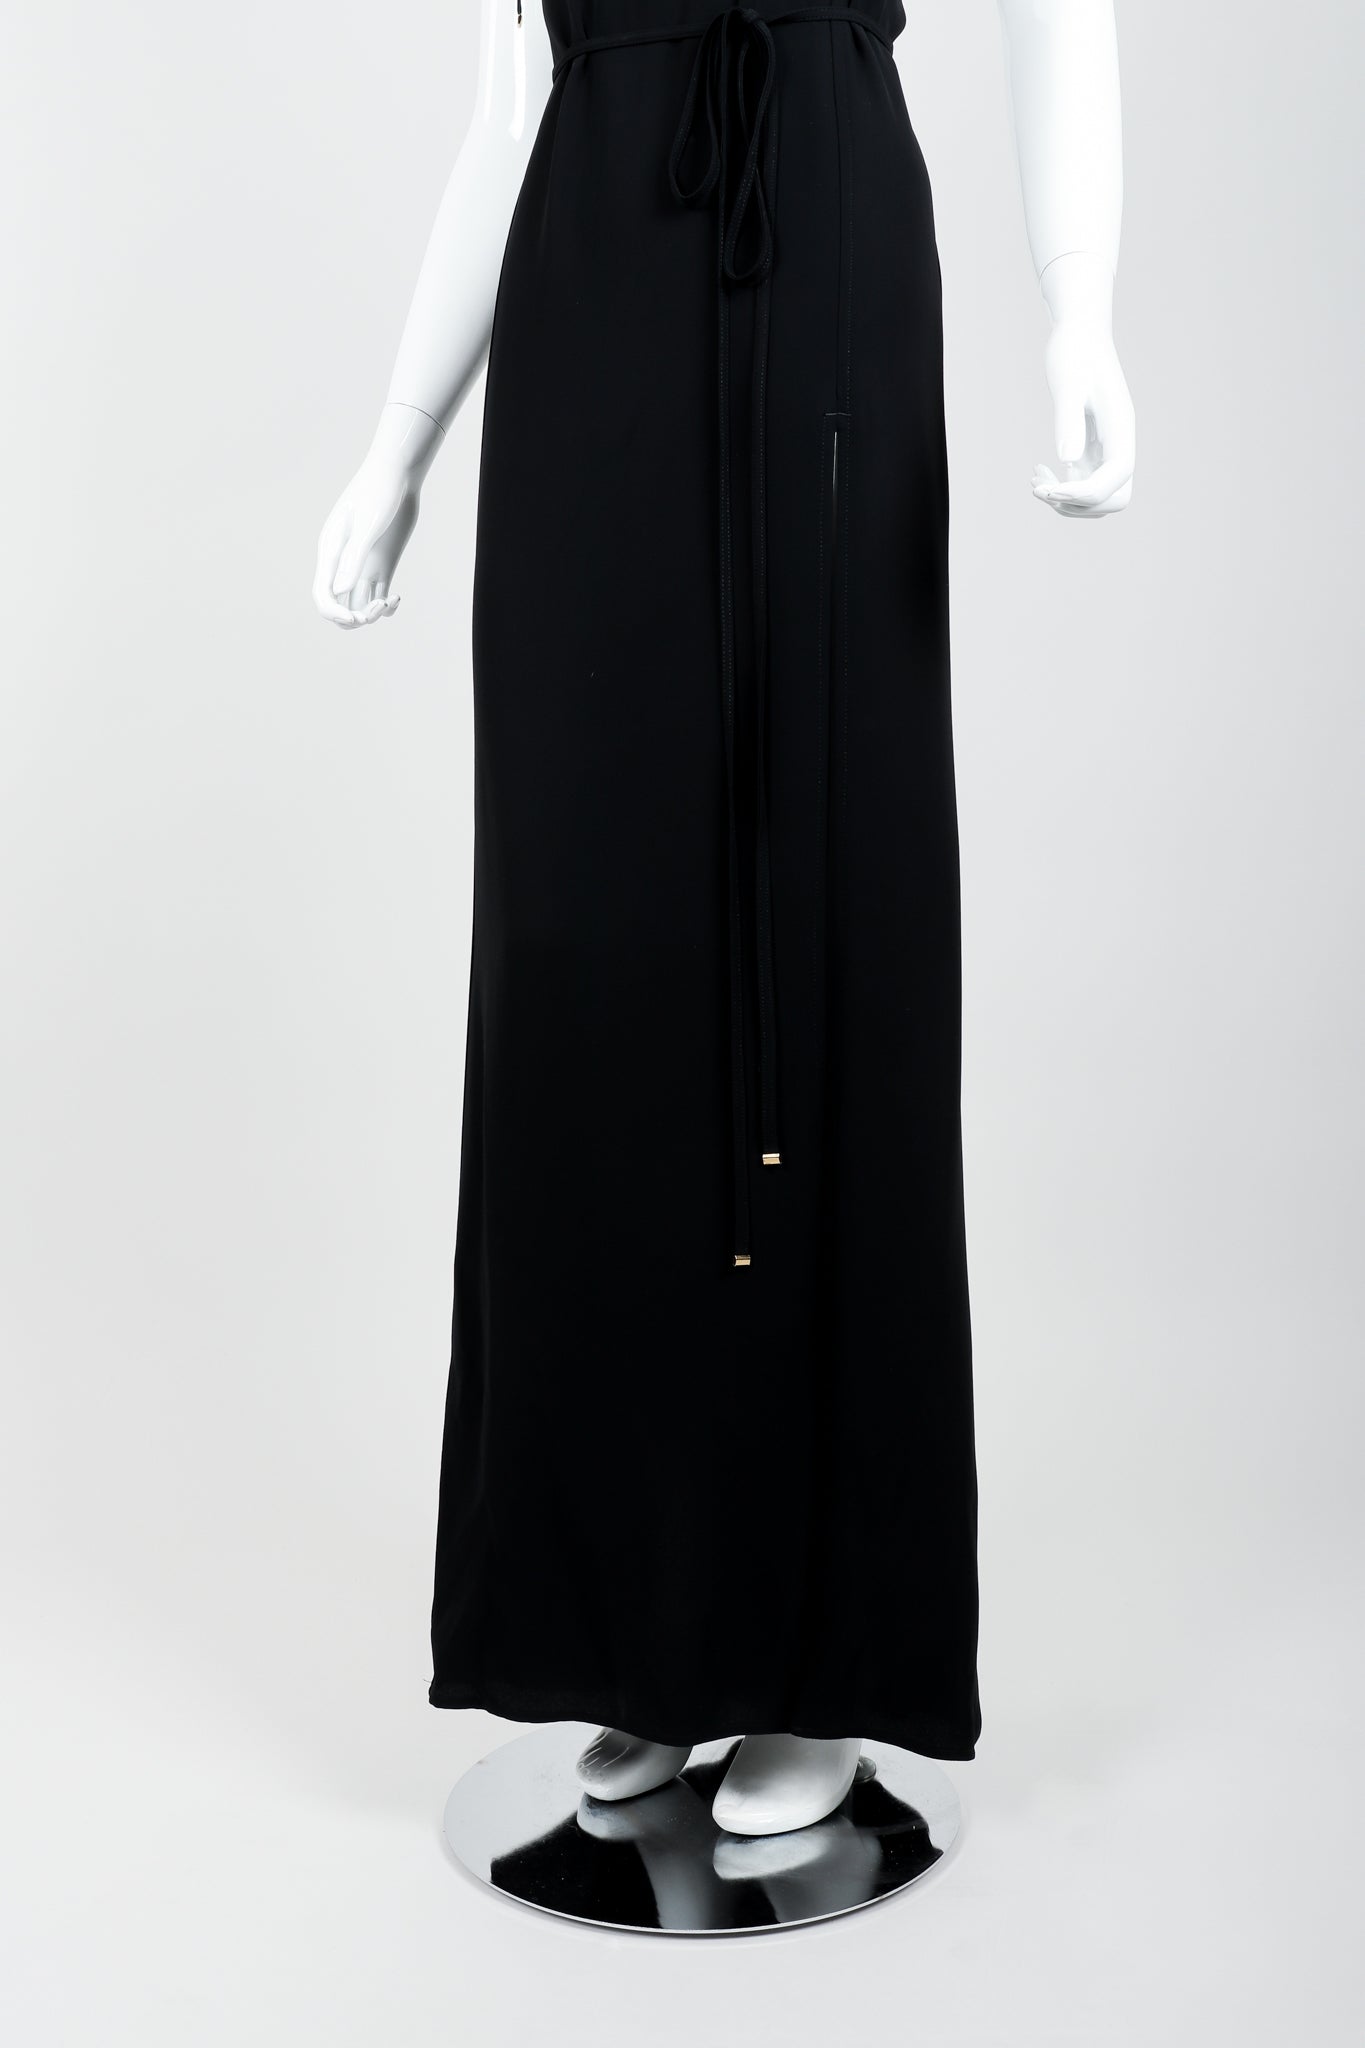 Vintage Jean Paul Gaultier Crepe Grommet Strap Gown w/ High Slit on Mannequin skirt at Recess